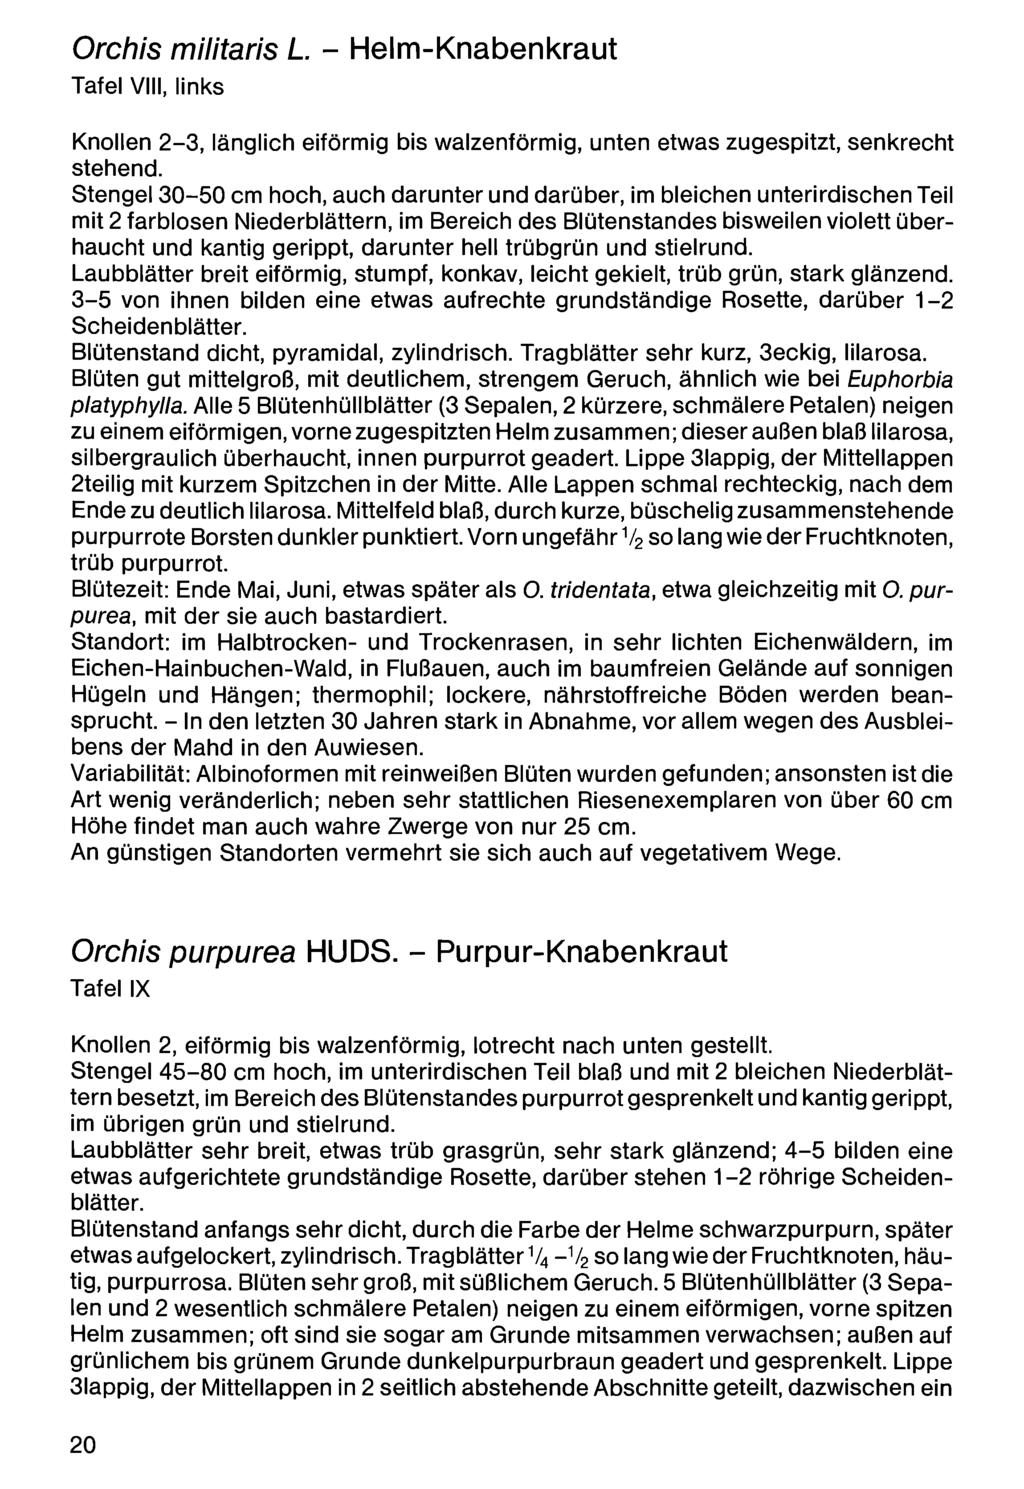 Orchis militaris L. - Helm-Knabenkraut Tafel VIII, links Zool.-Bot. Ges. Österreich, Austria; download unter www.biologiezentrum.